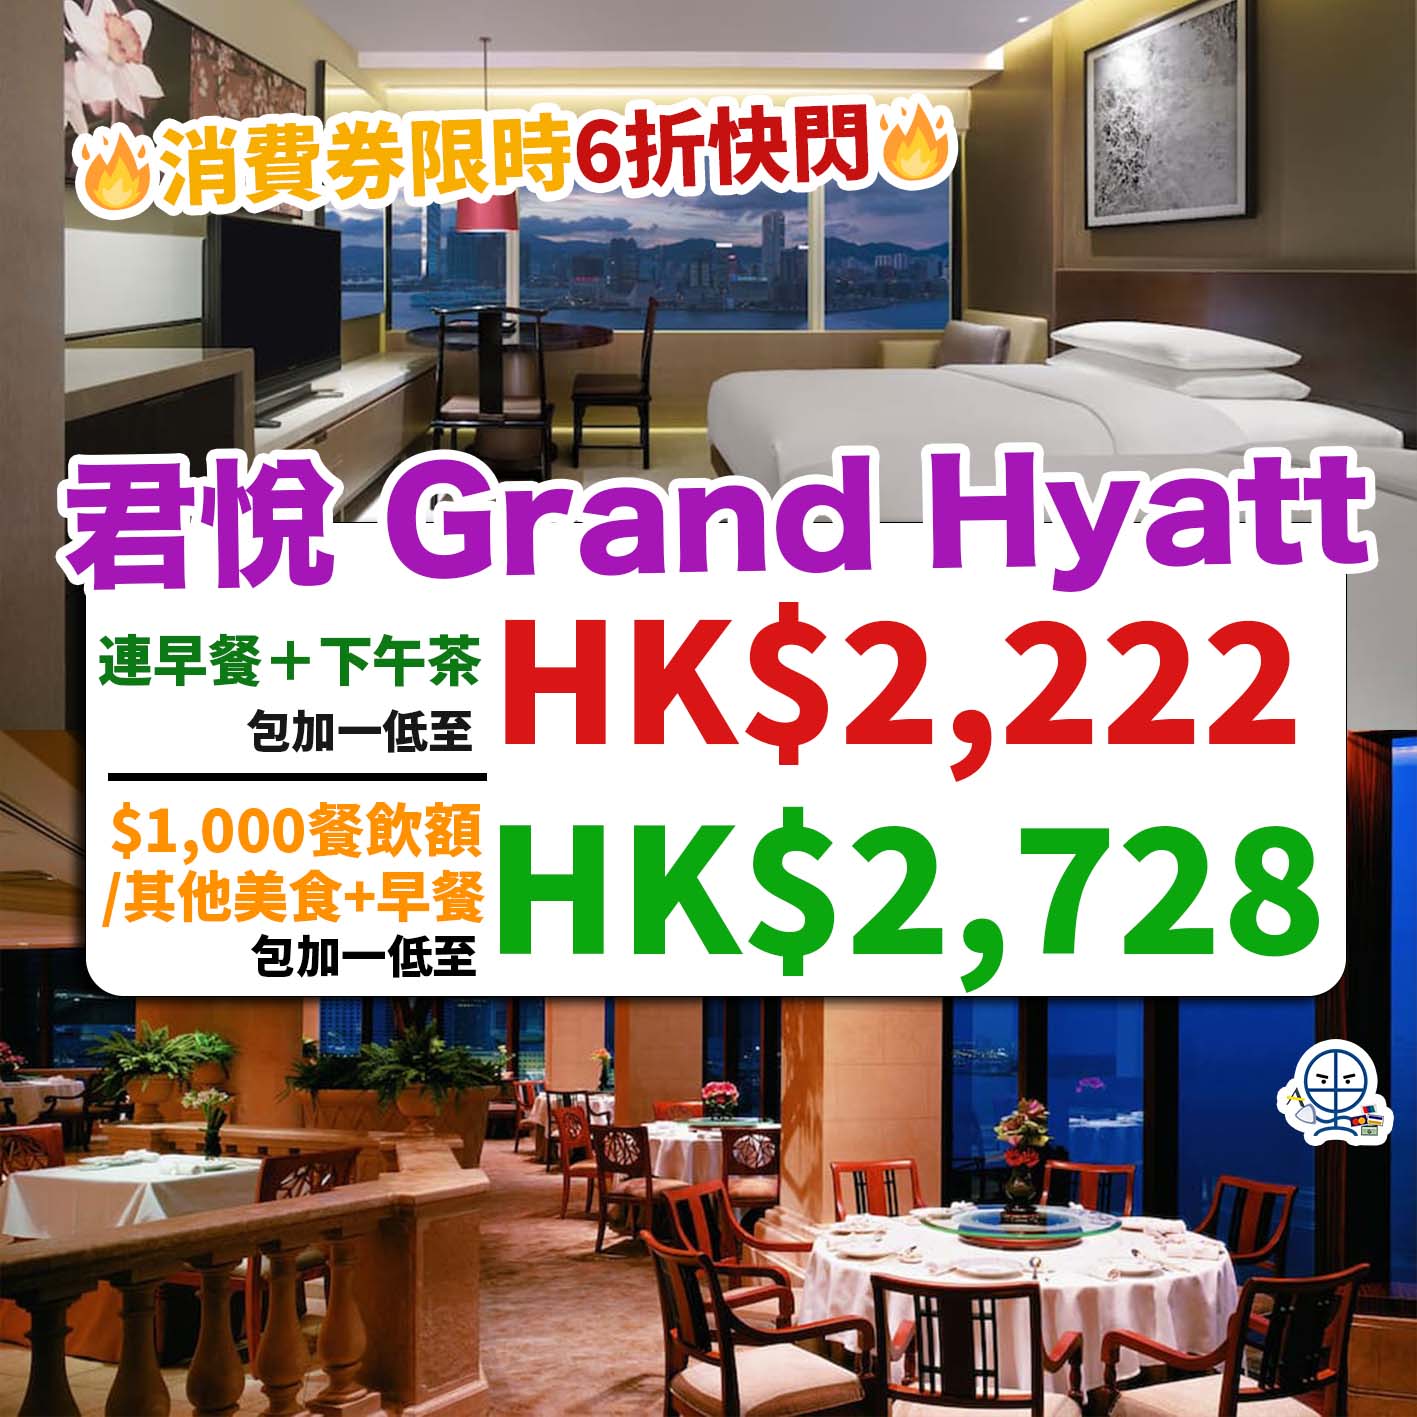 香港君悅酒店-Grand Hyatt Hotel-Staycation優惠-高CP套票-香港酒店Staycation